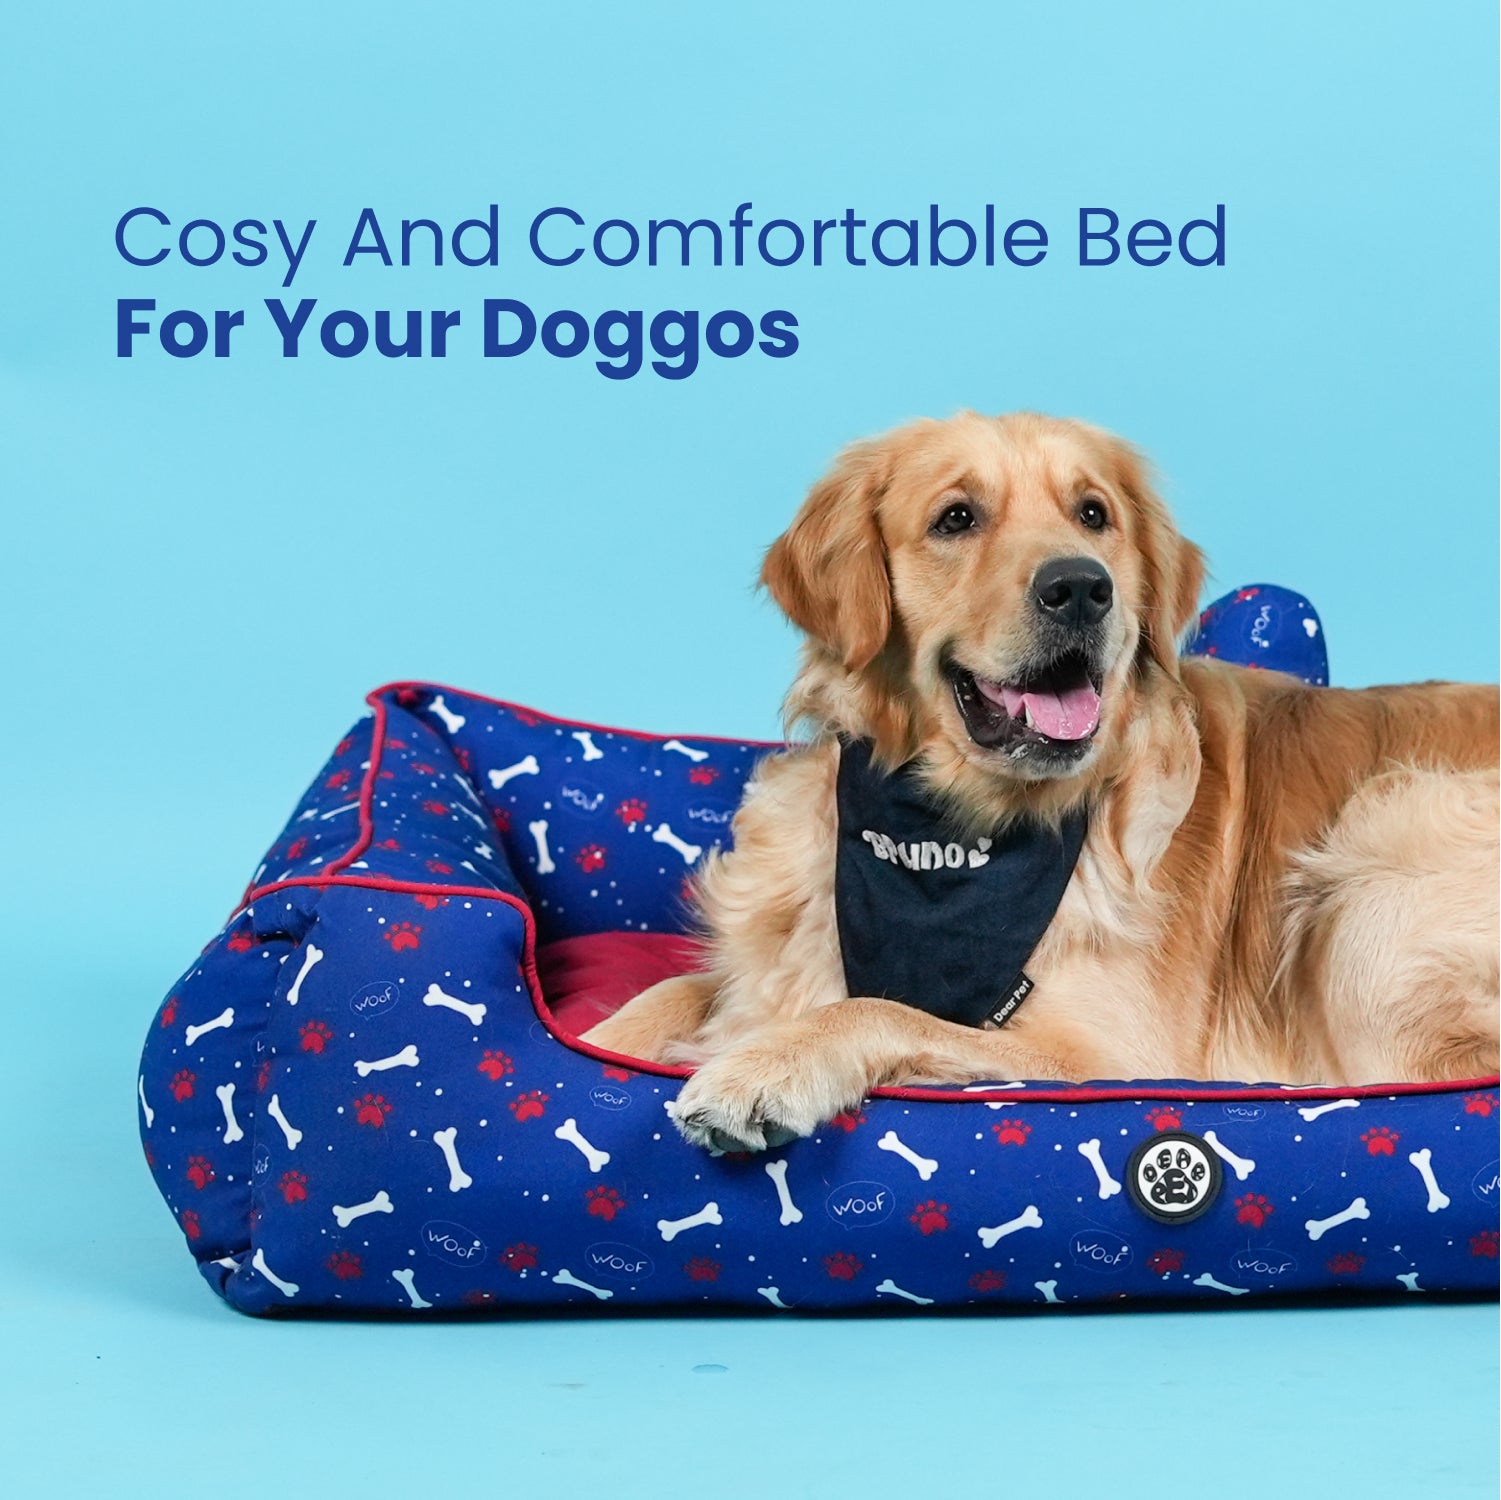 Dear Pet Double Trouble Blue & Orange Lounger Dog Bed